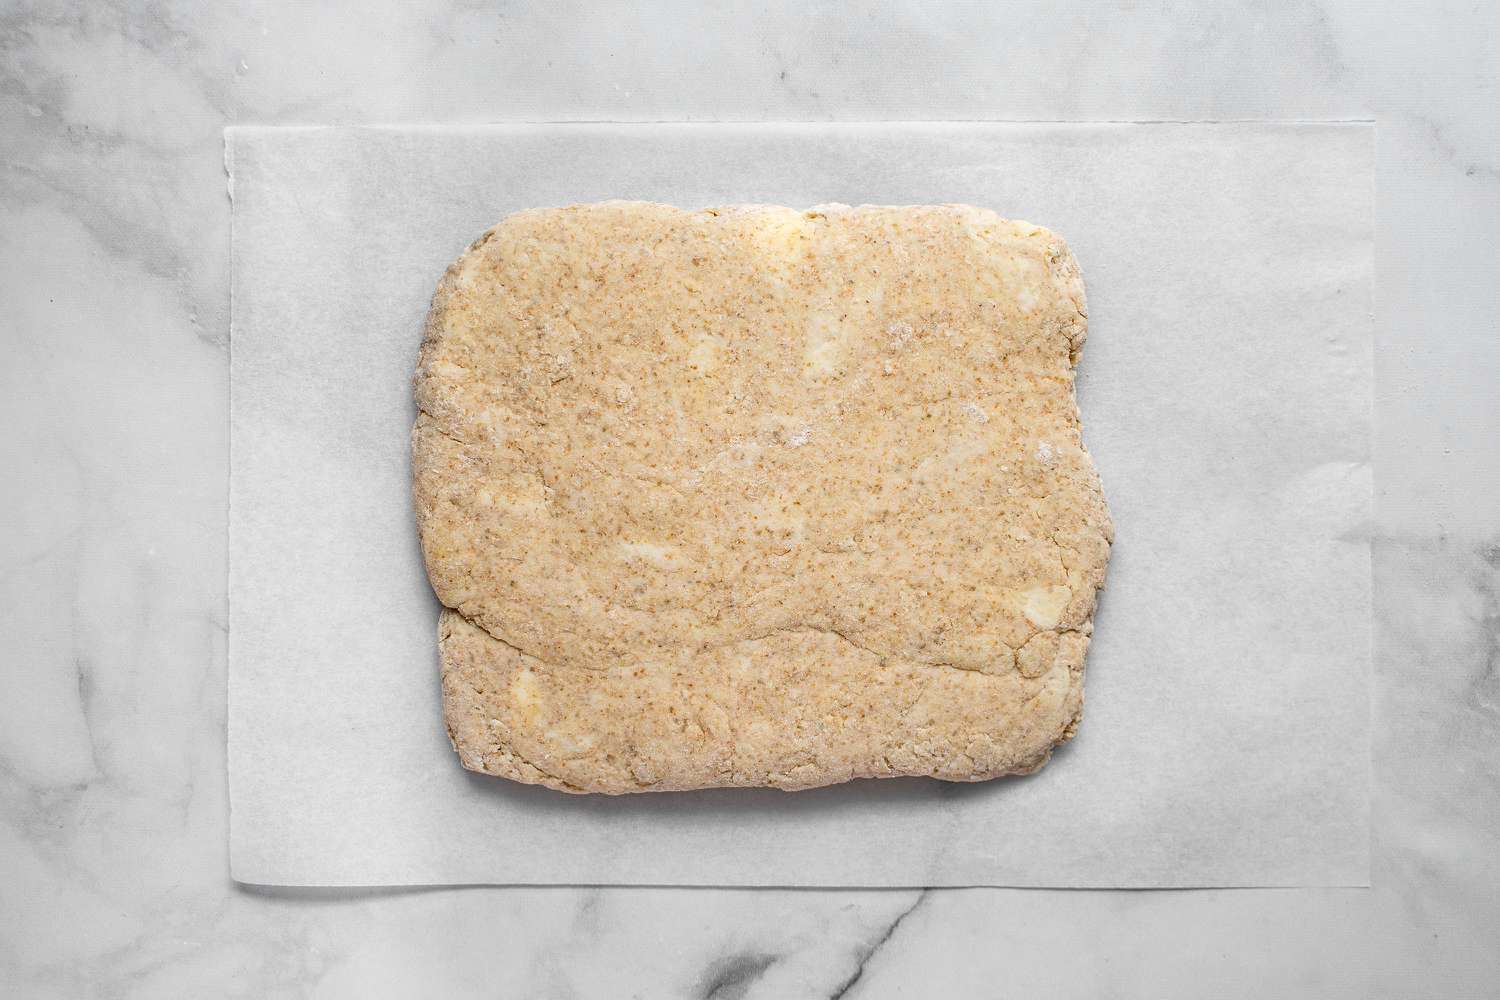 biscuit dough on parchment paper 